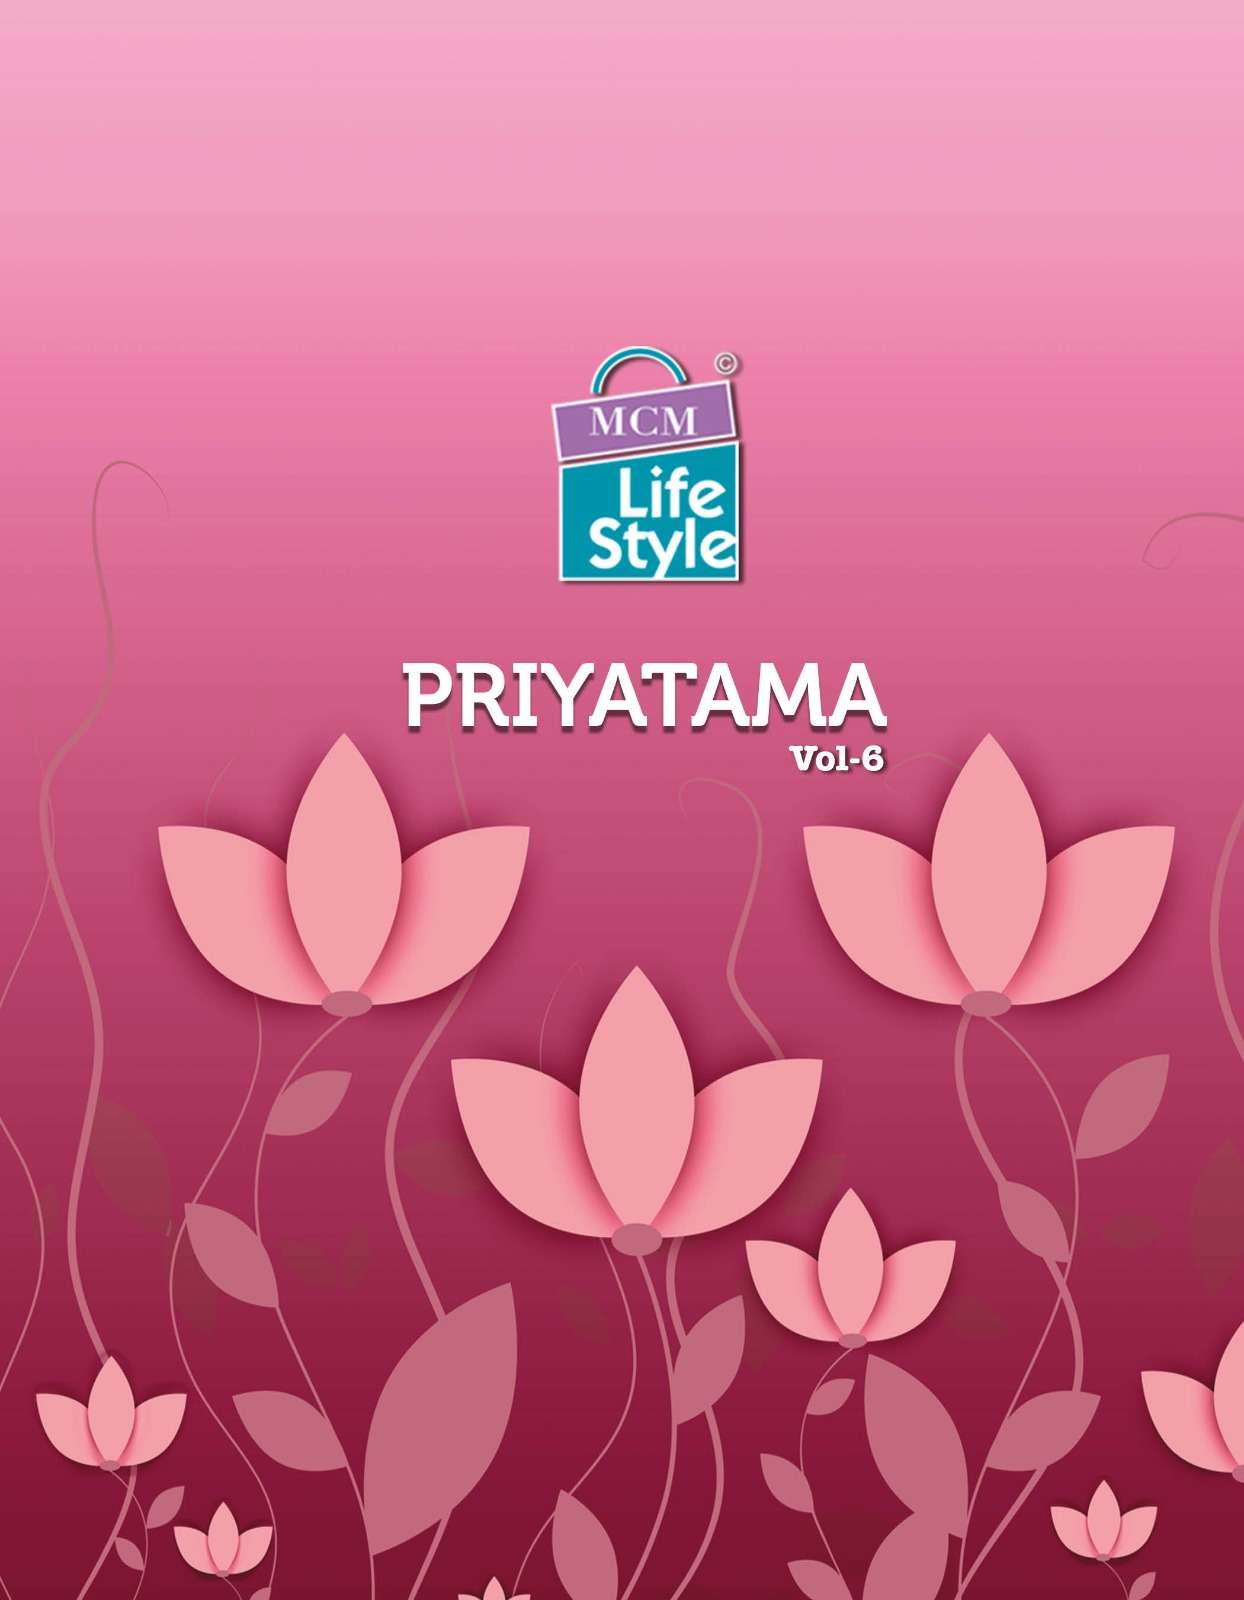 priyatama vol 6 by mcm lifestyle cambric cotton pair set fancy kurti with pant